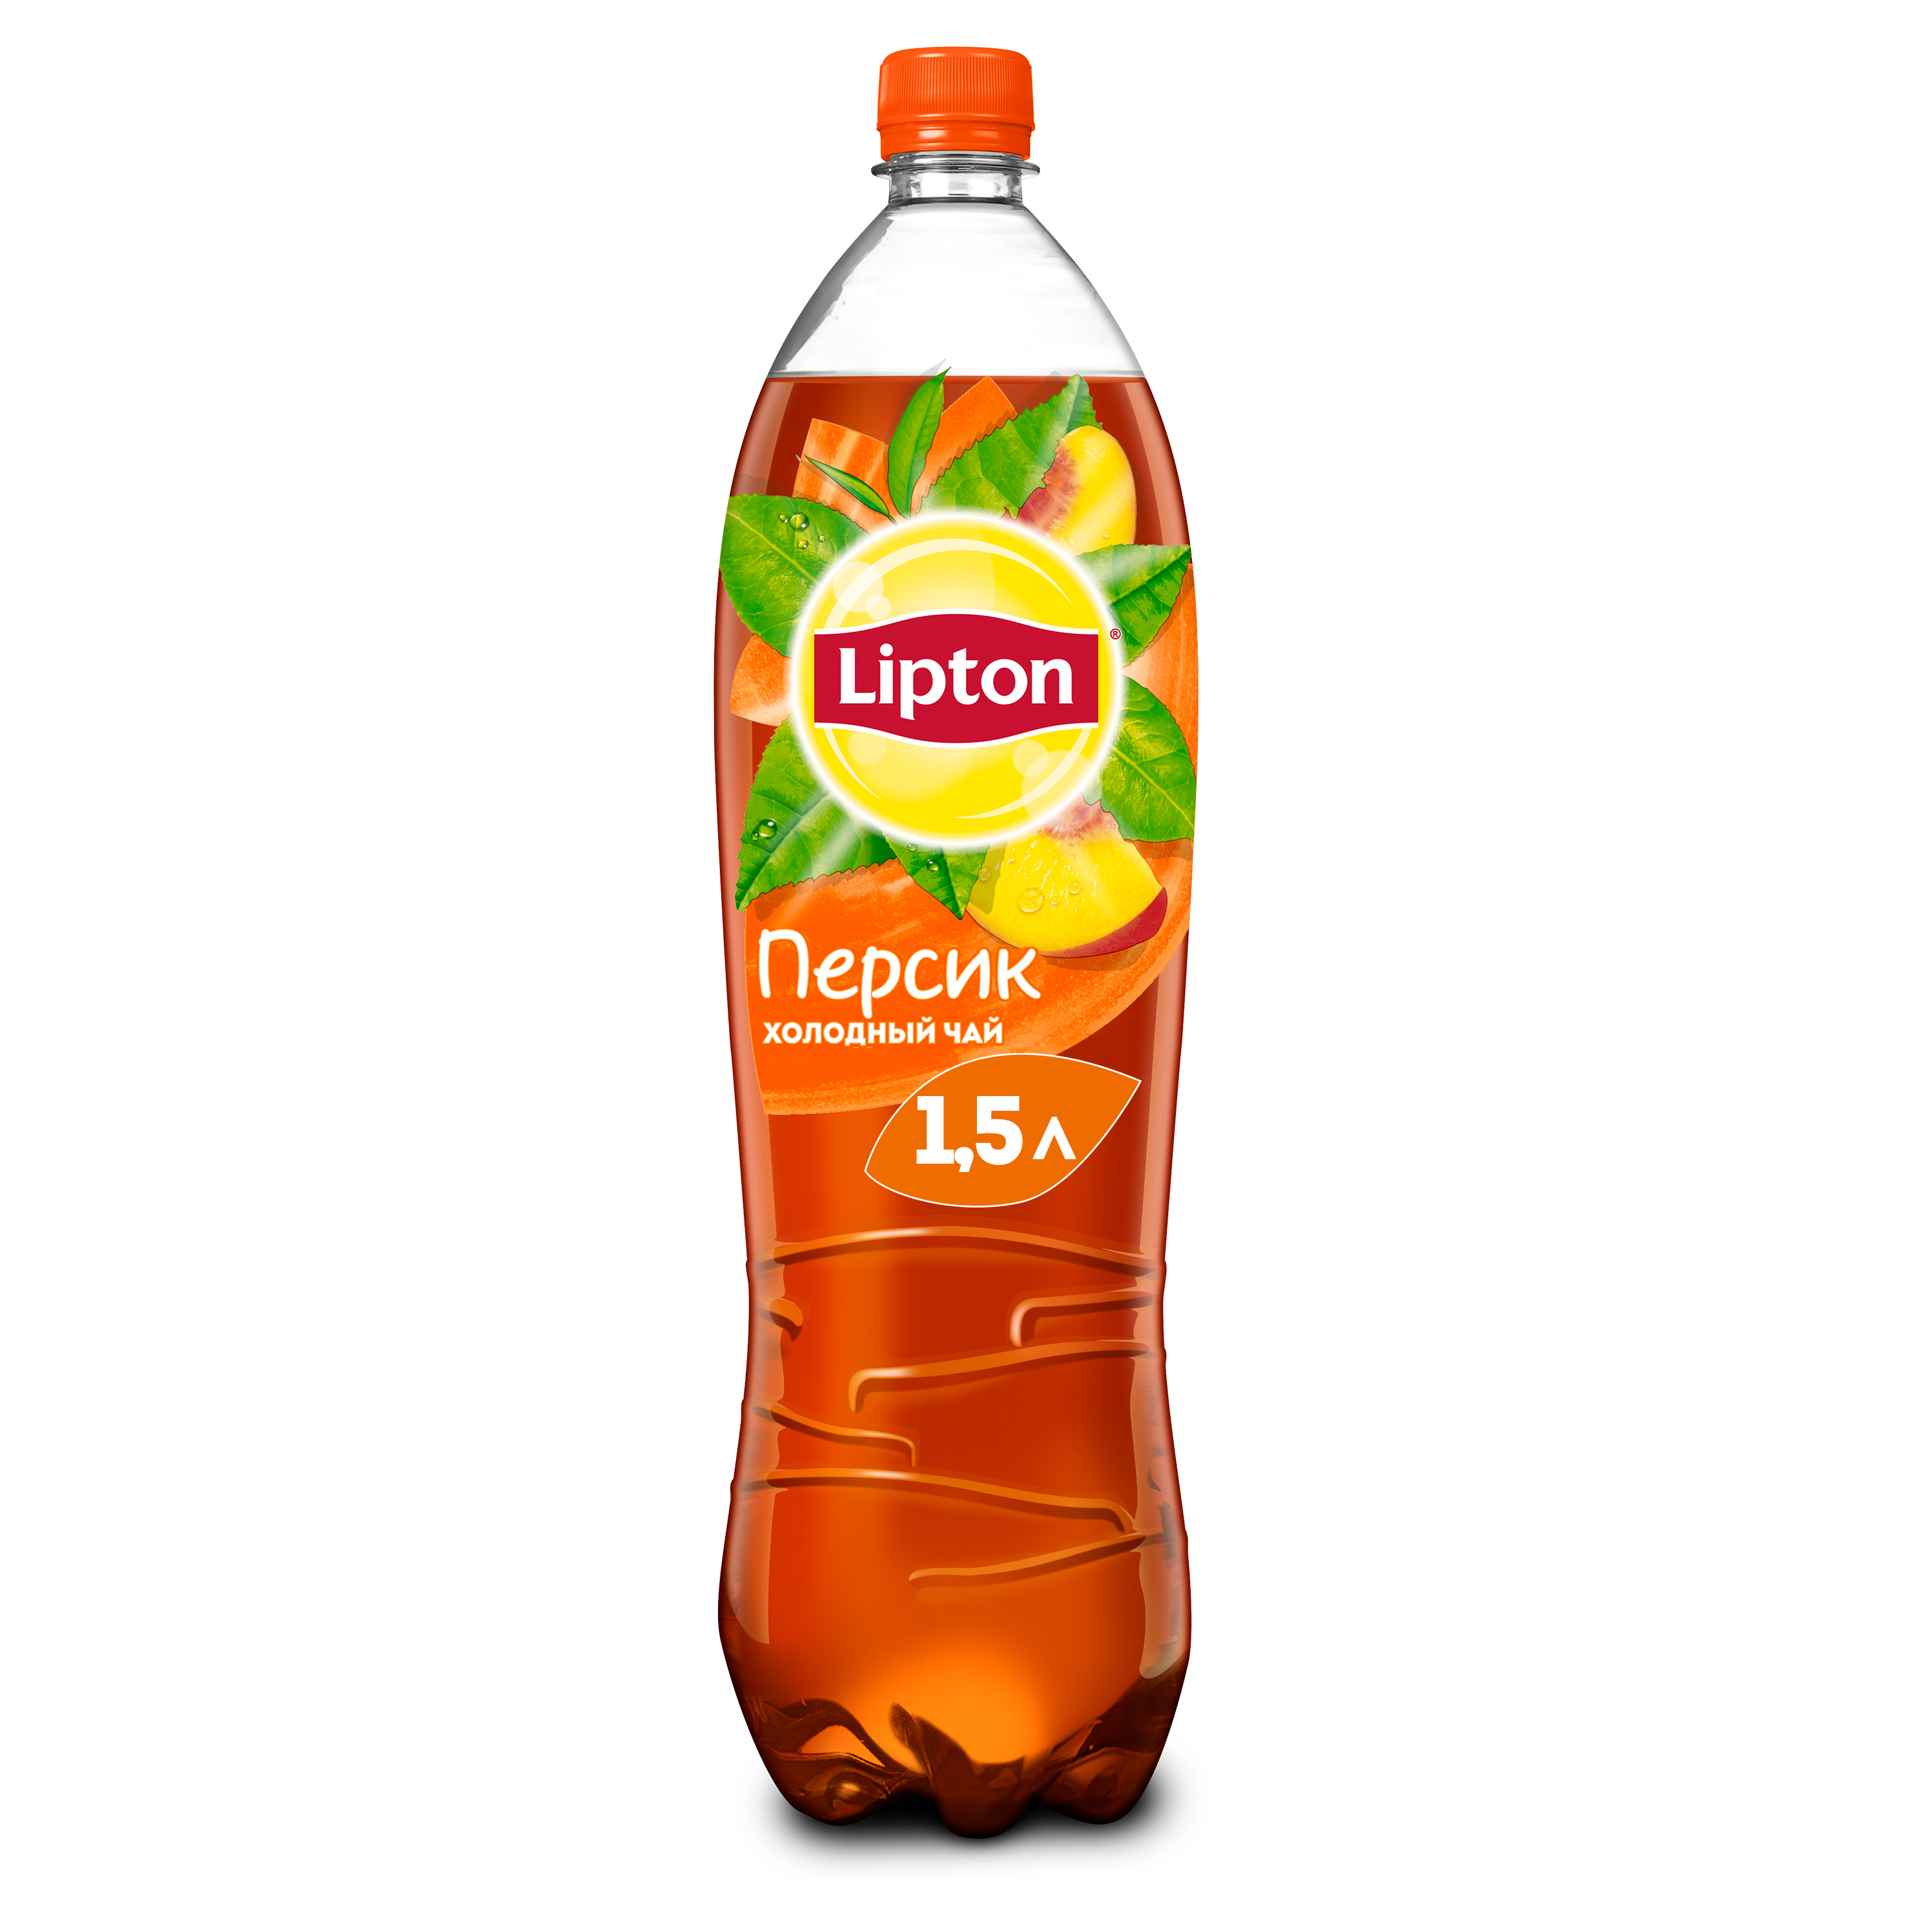 Липтон 1.5. Холодный чай Lipton персик 1л. Напиток холодный чай Липтон со вкусом персика 1 л в Пэте. Чай Липтон холодный персик 0.5л ПЭТ. Липтон (персик,зеленый)1л.